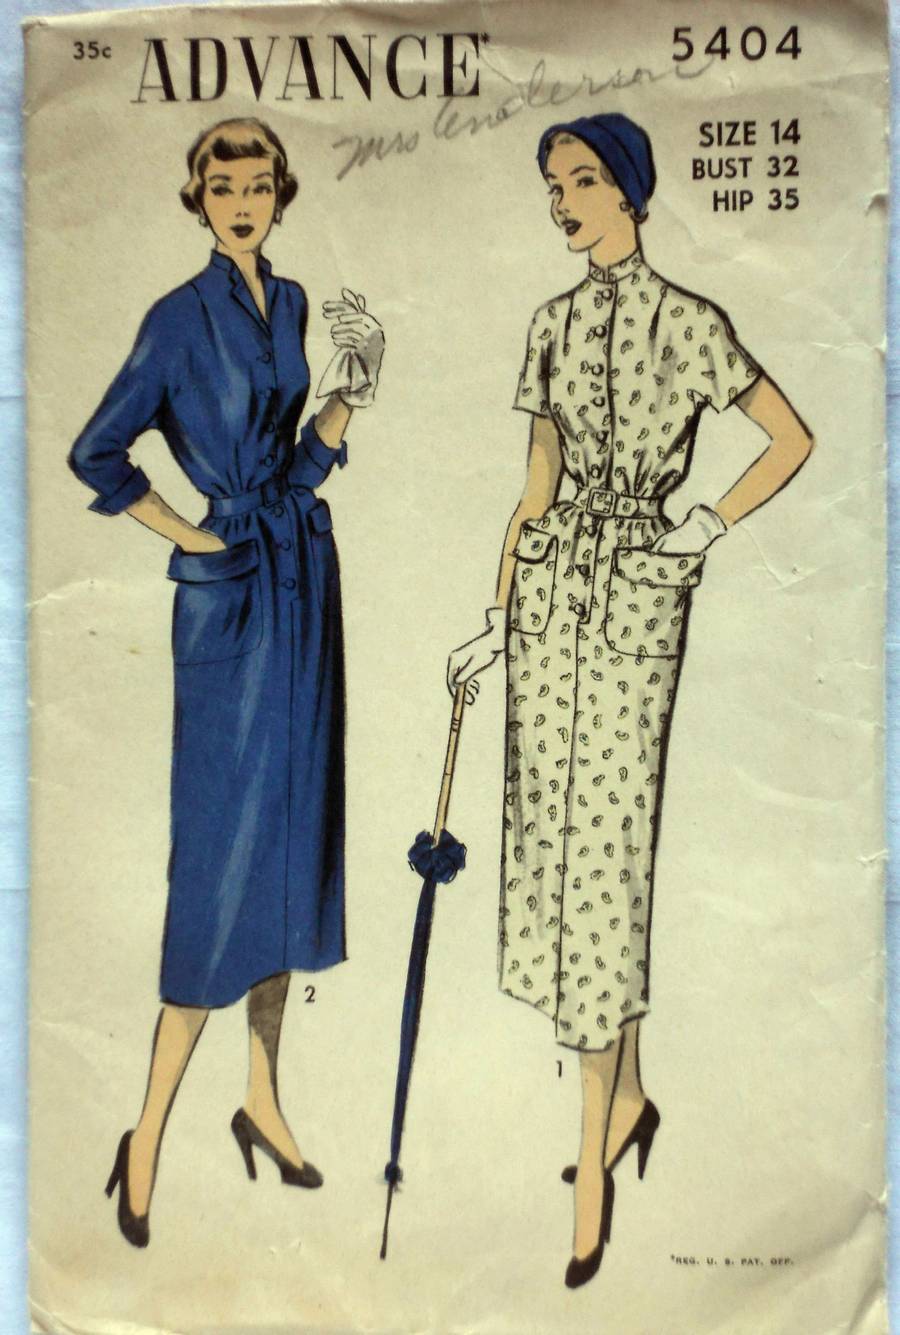 Vintage 40s Advance Belted Slim Dress Sewing Pattern #5404 Size 14 Bust 32